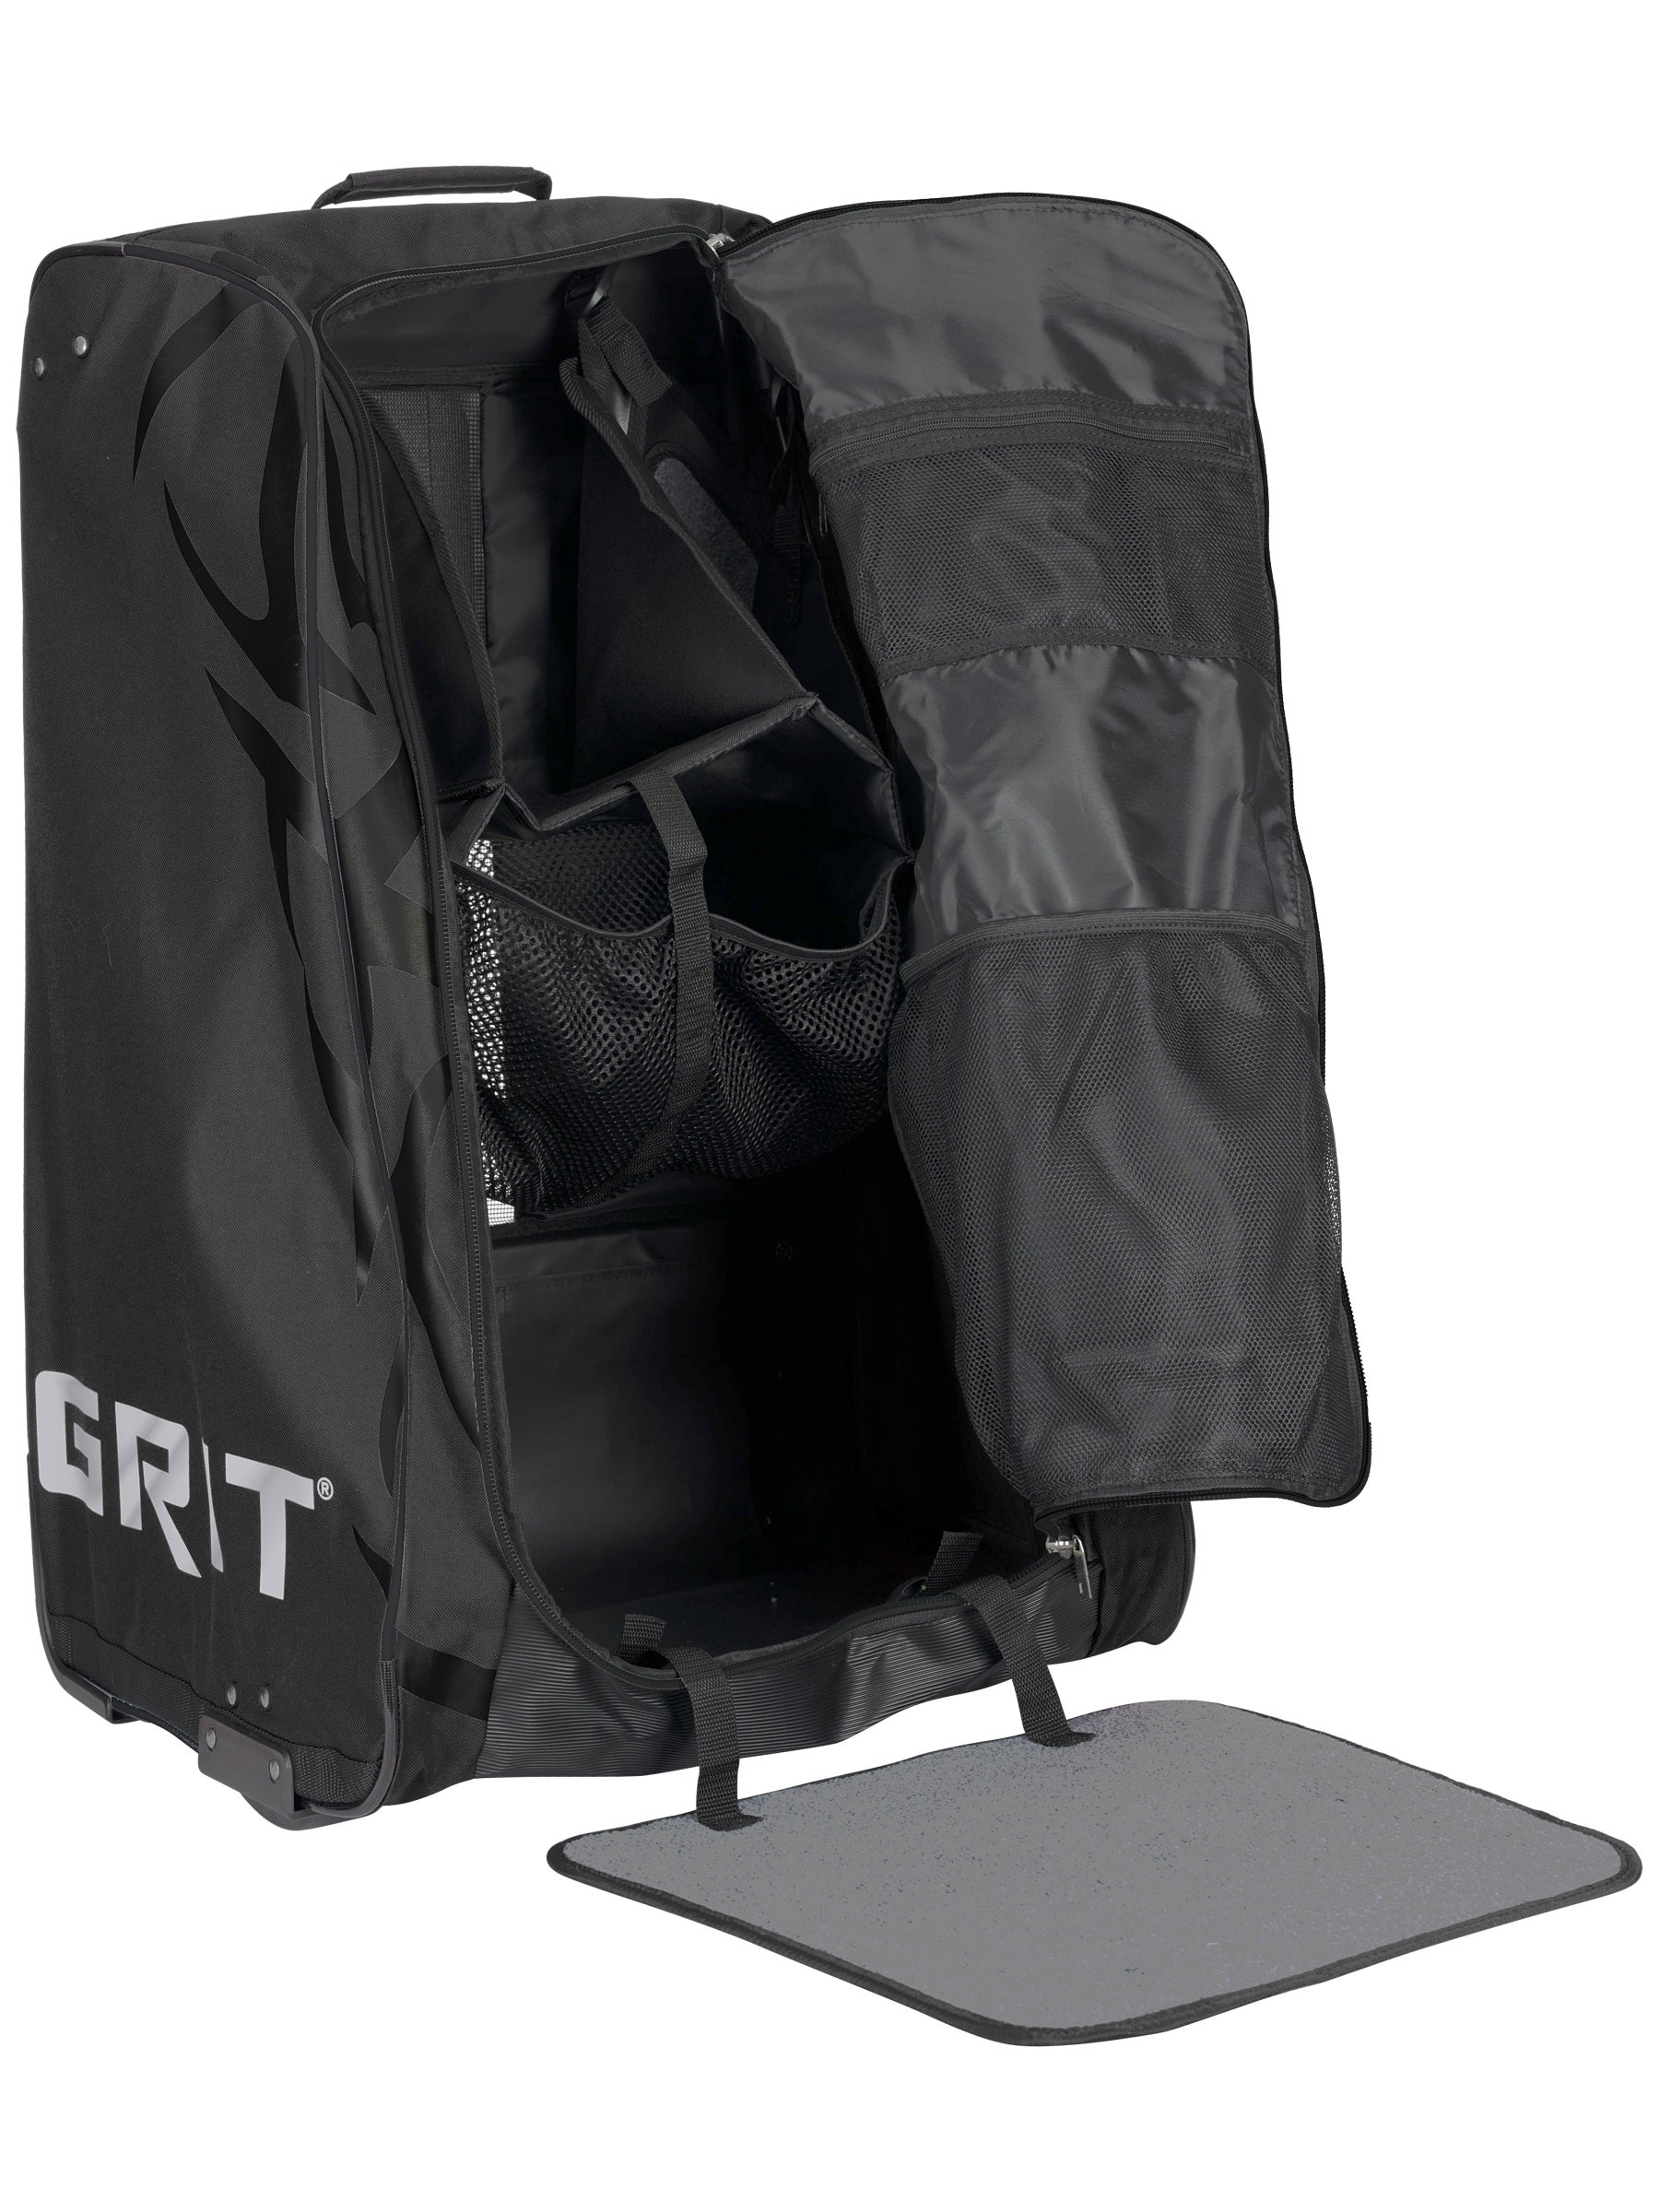 GRIT HYFX Hockey Tower Equipment Bag 30 inch Black 